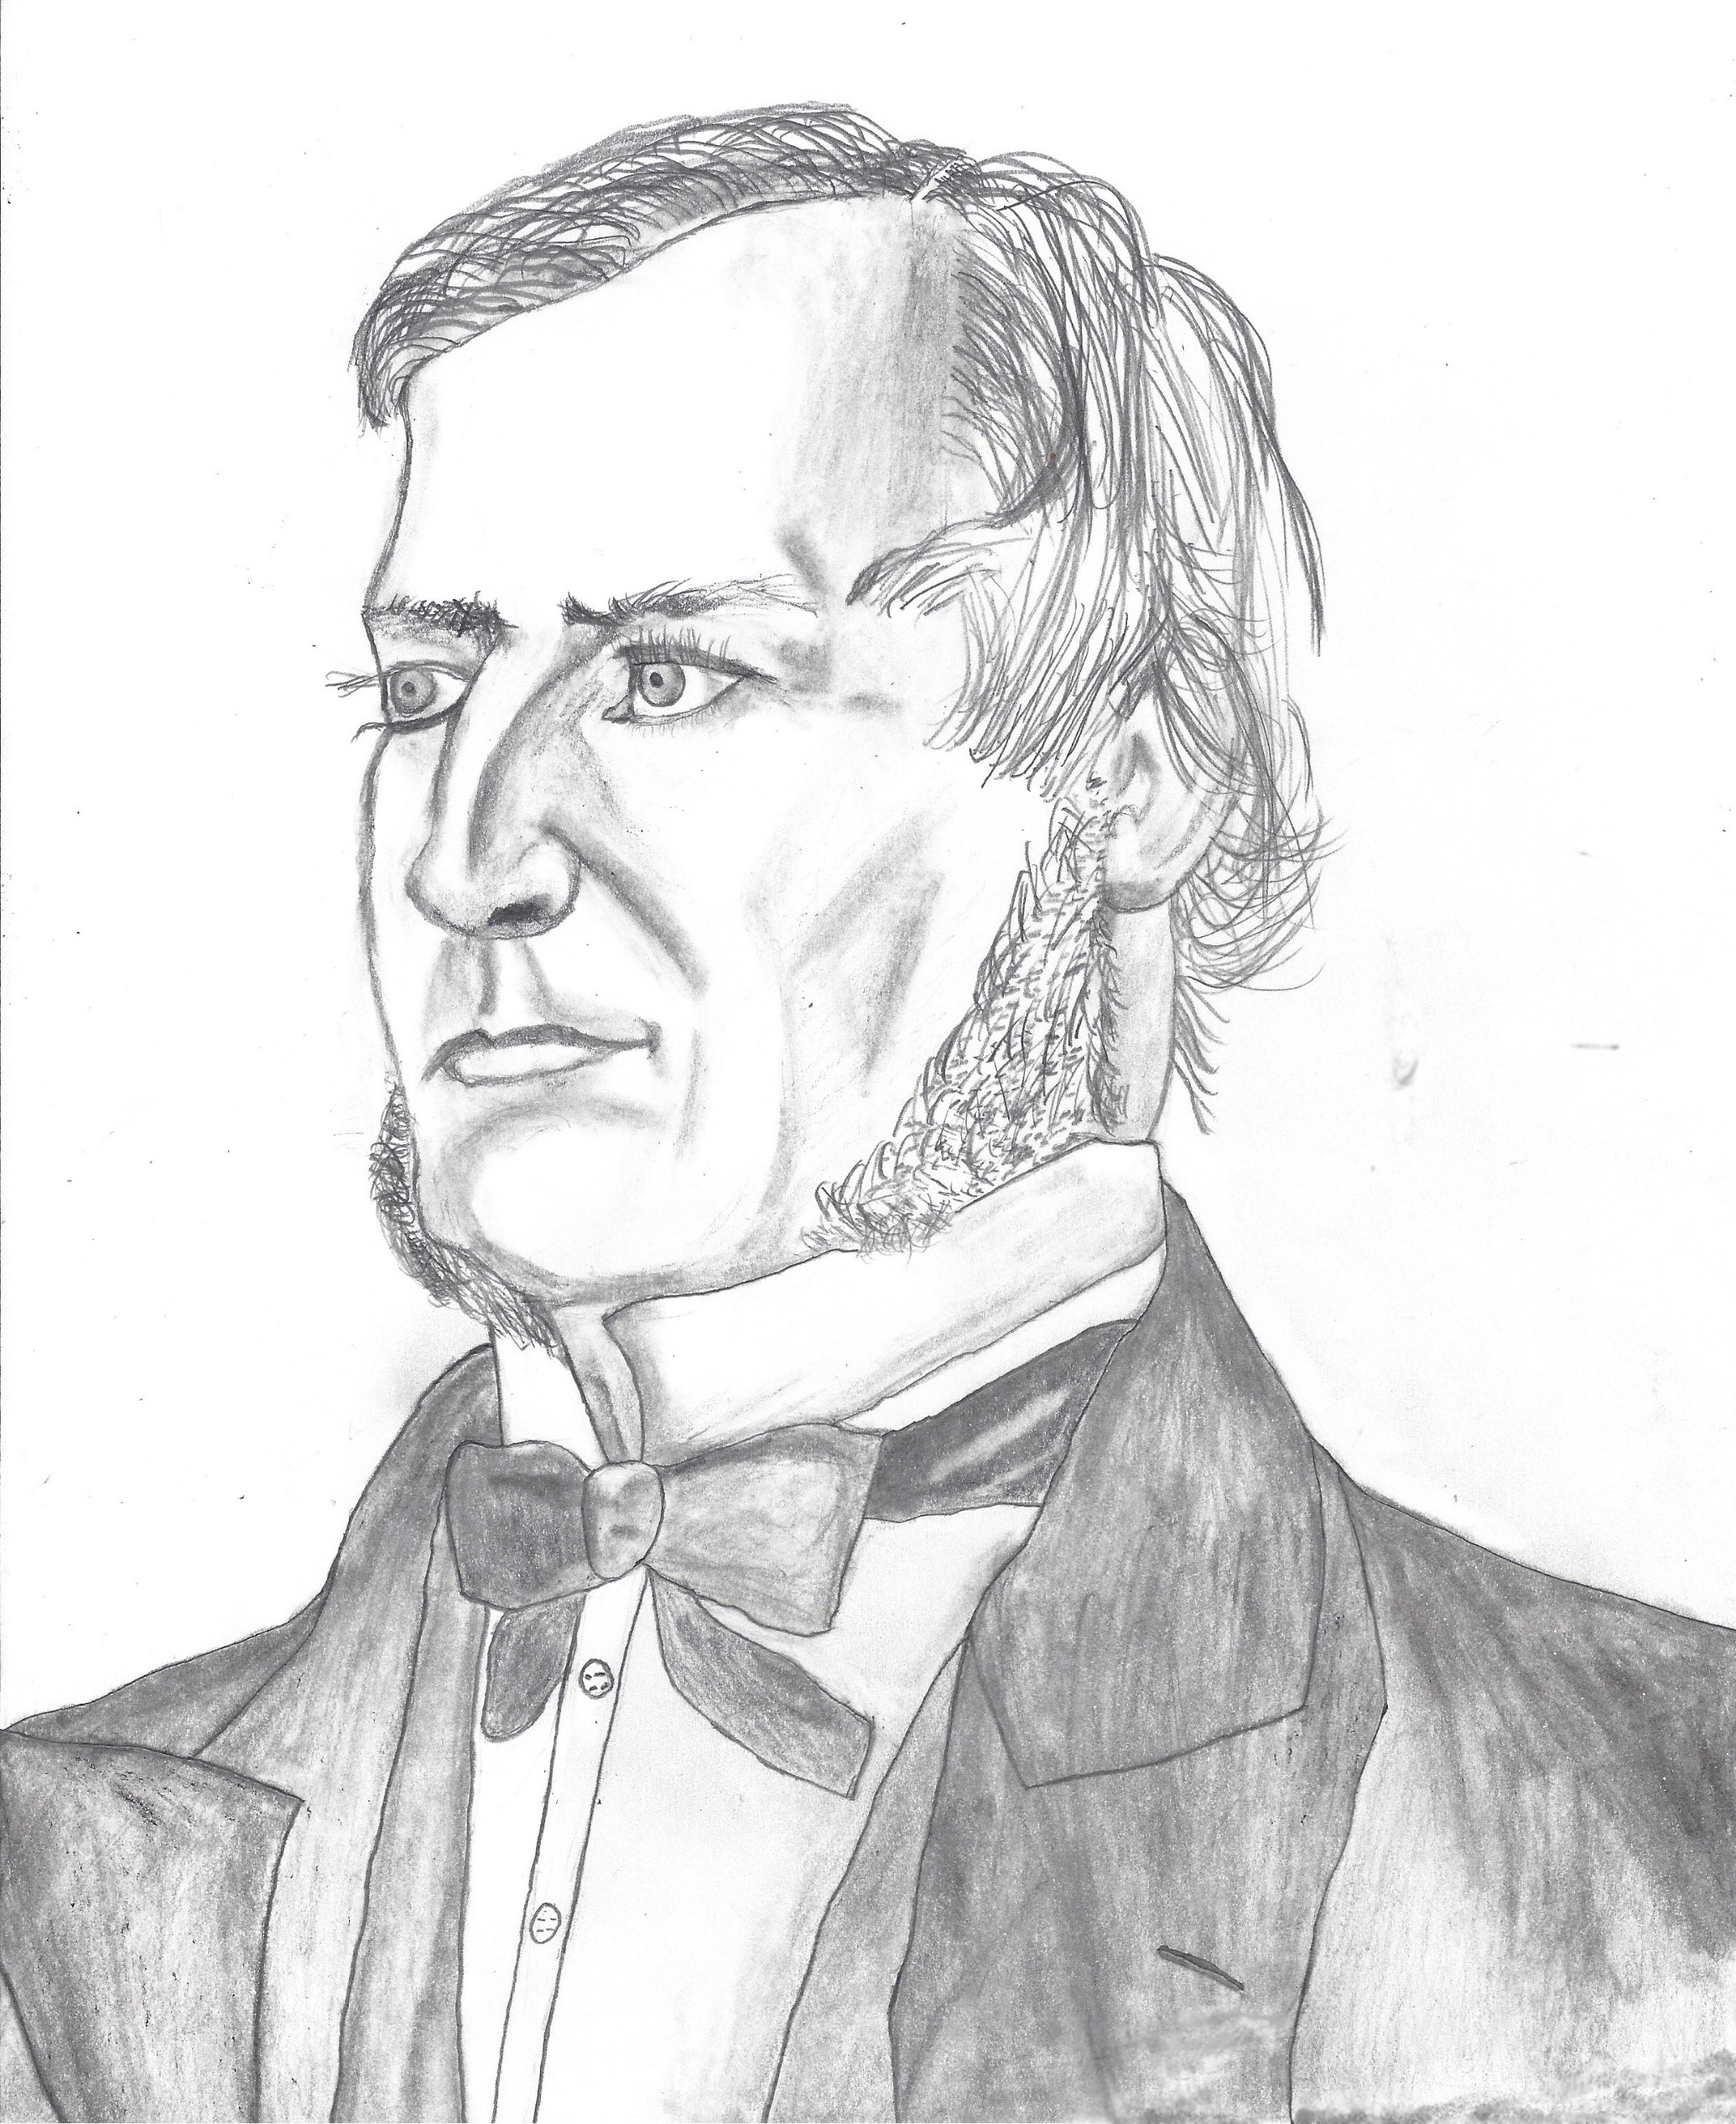 A Pencil Portrait of George Boole.